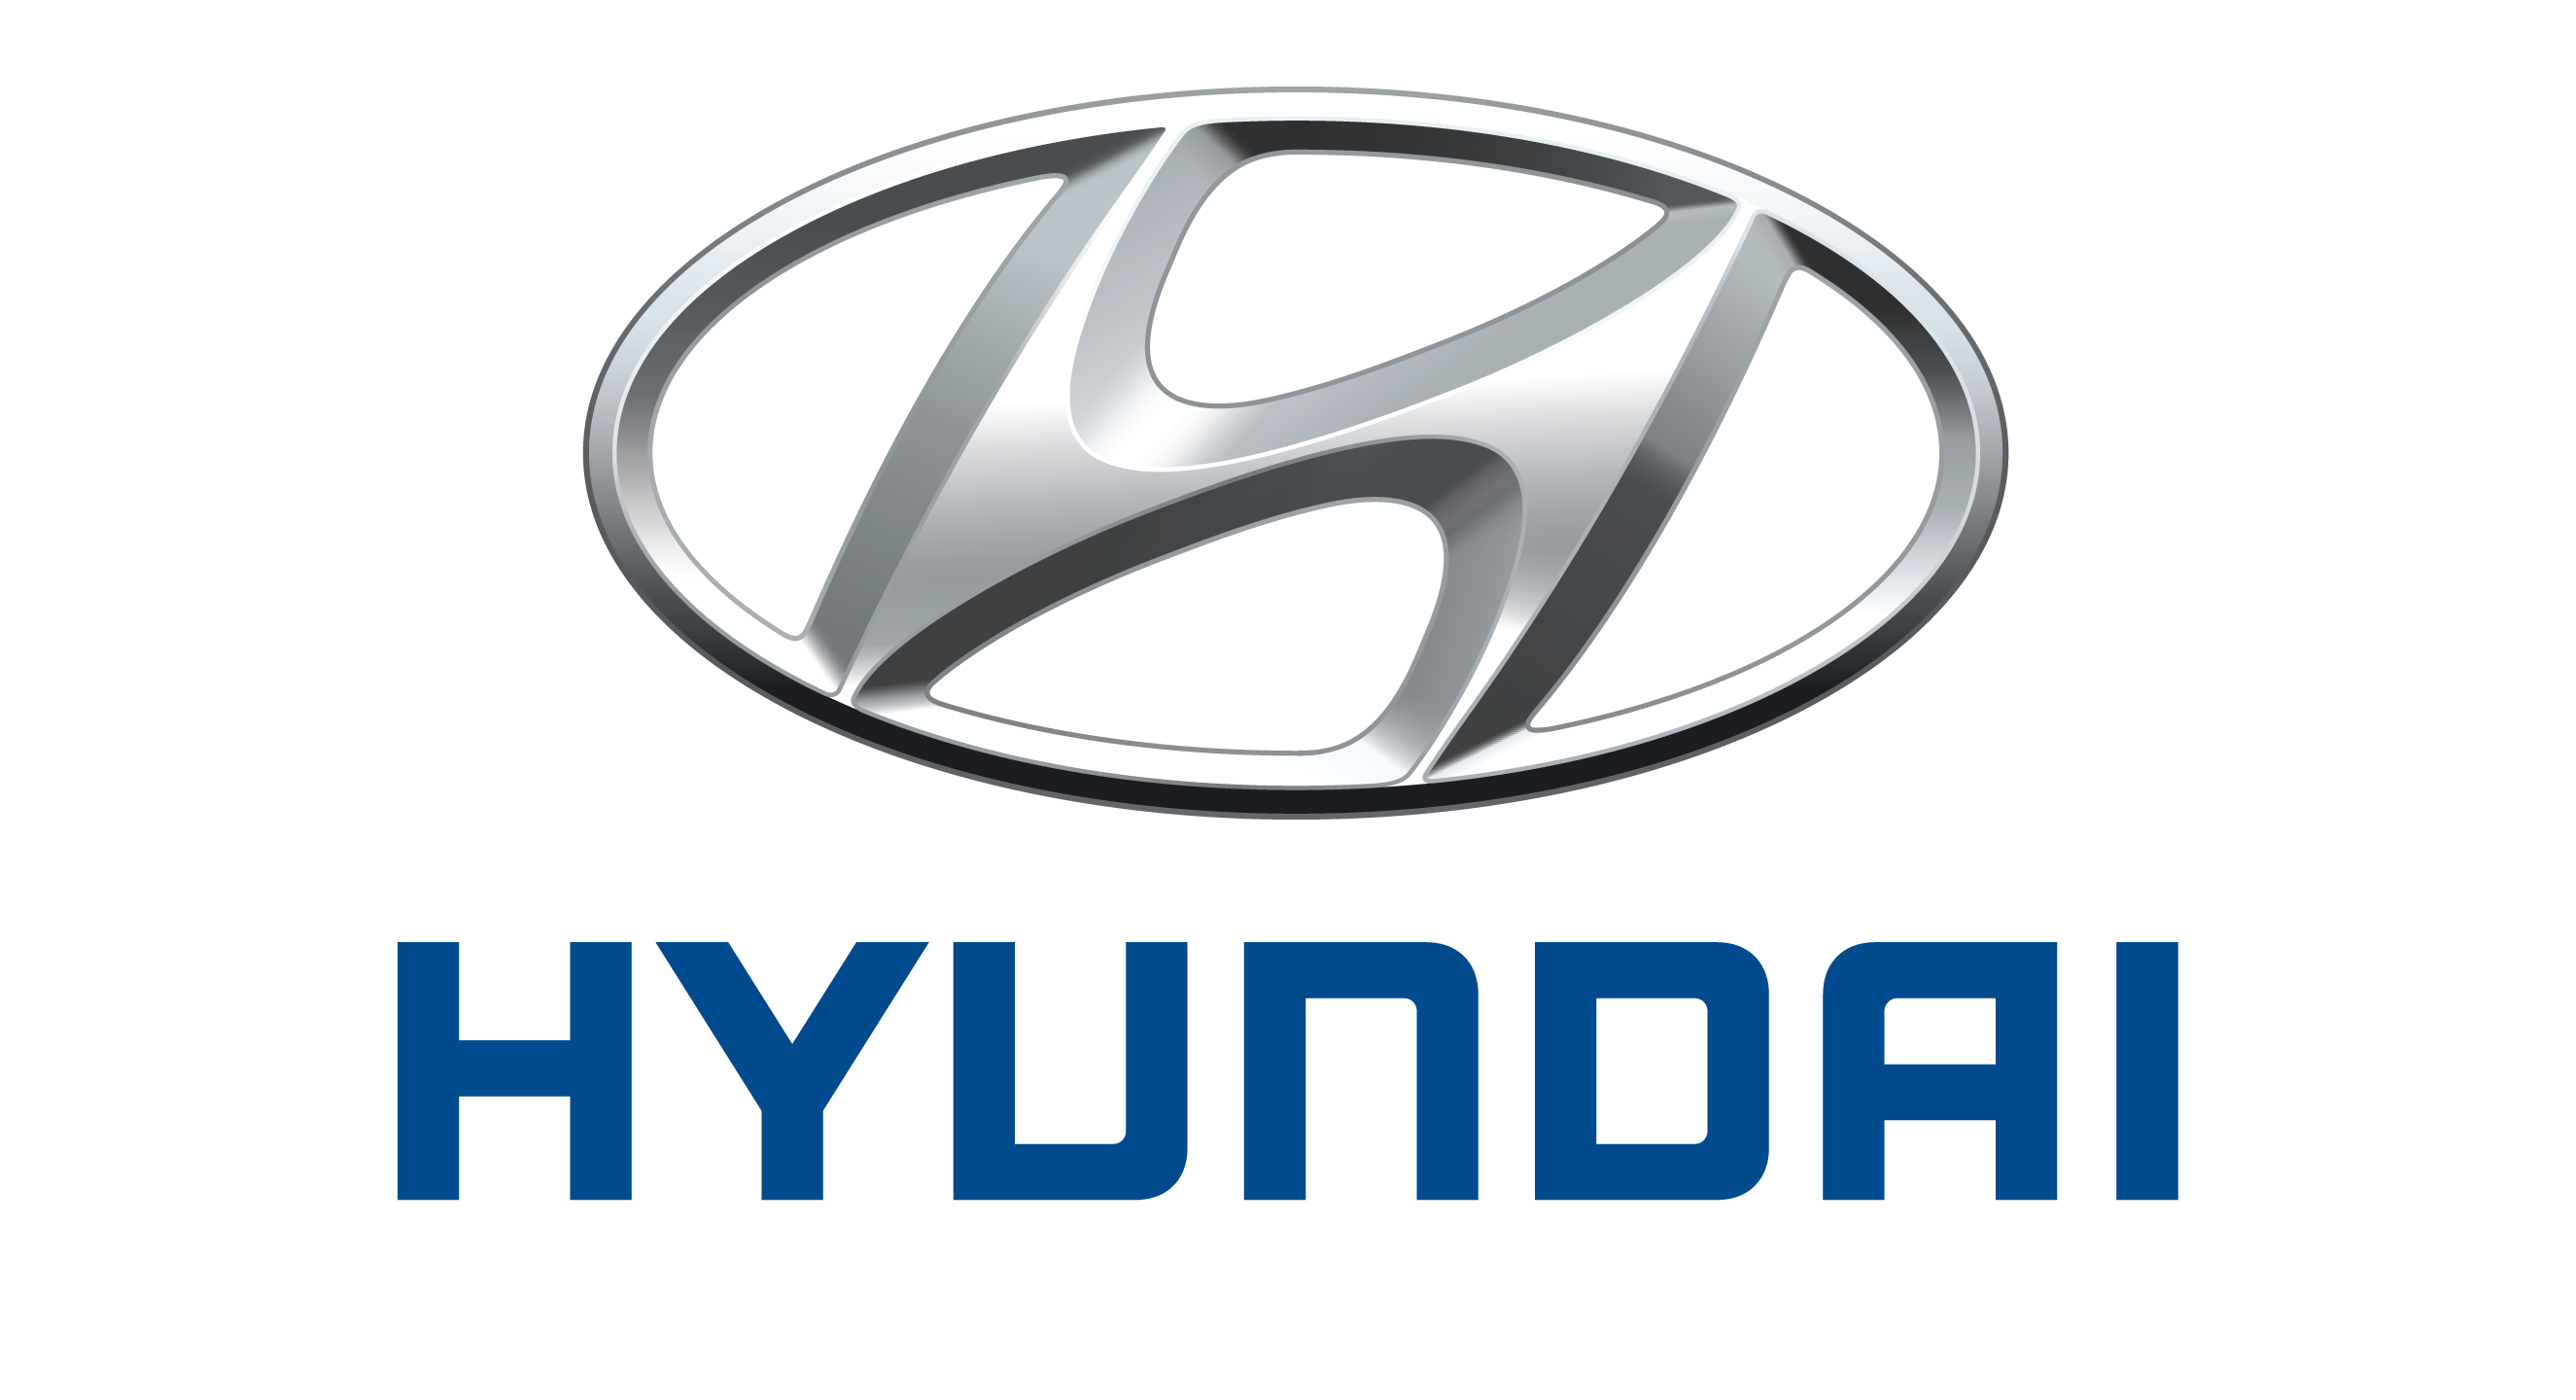 Hyundai-logo | Brstockholm